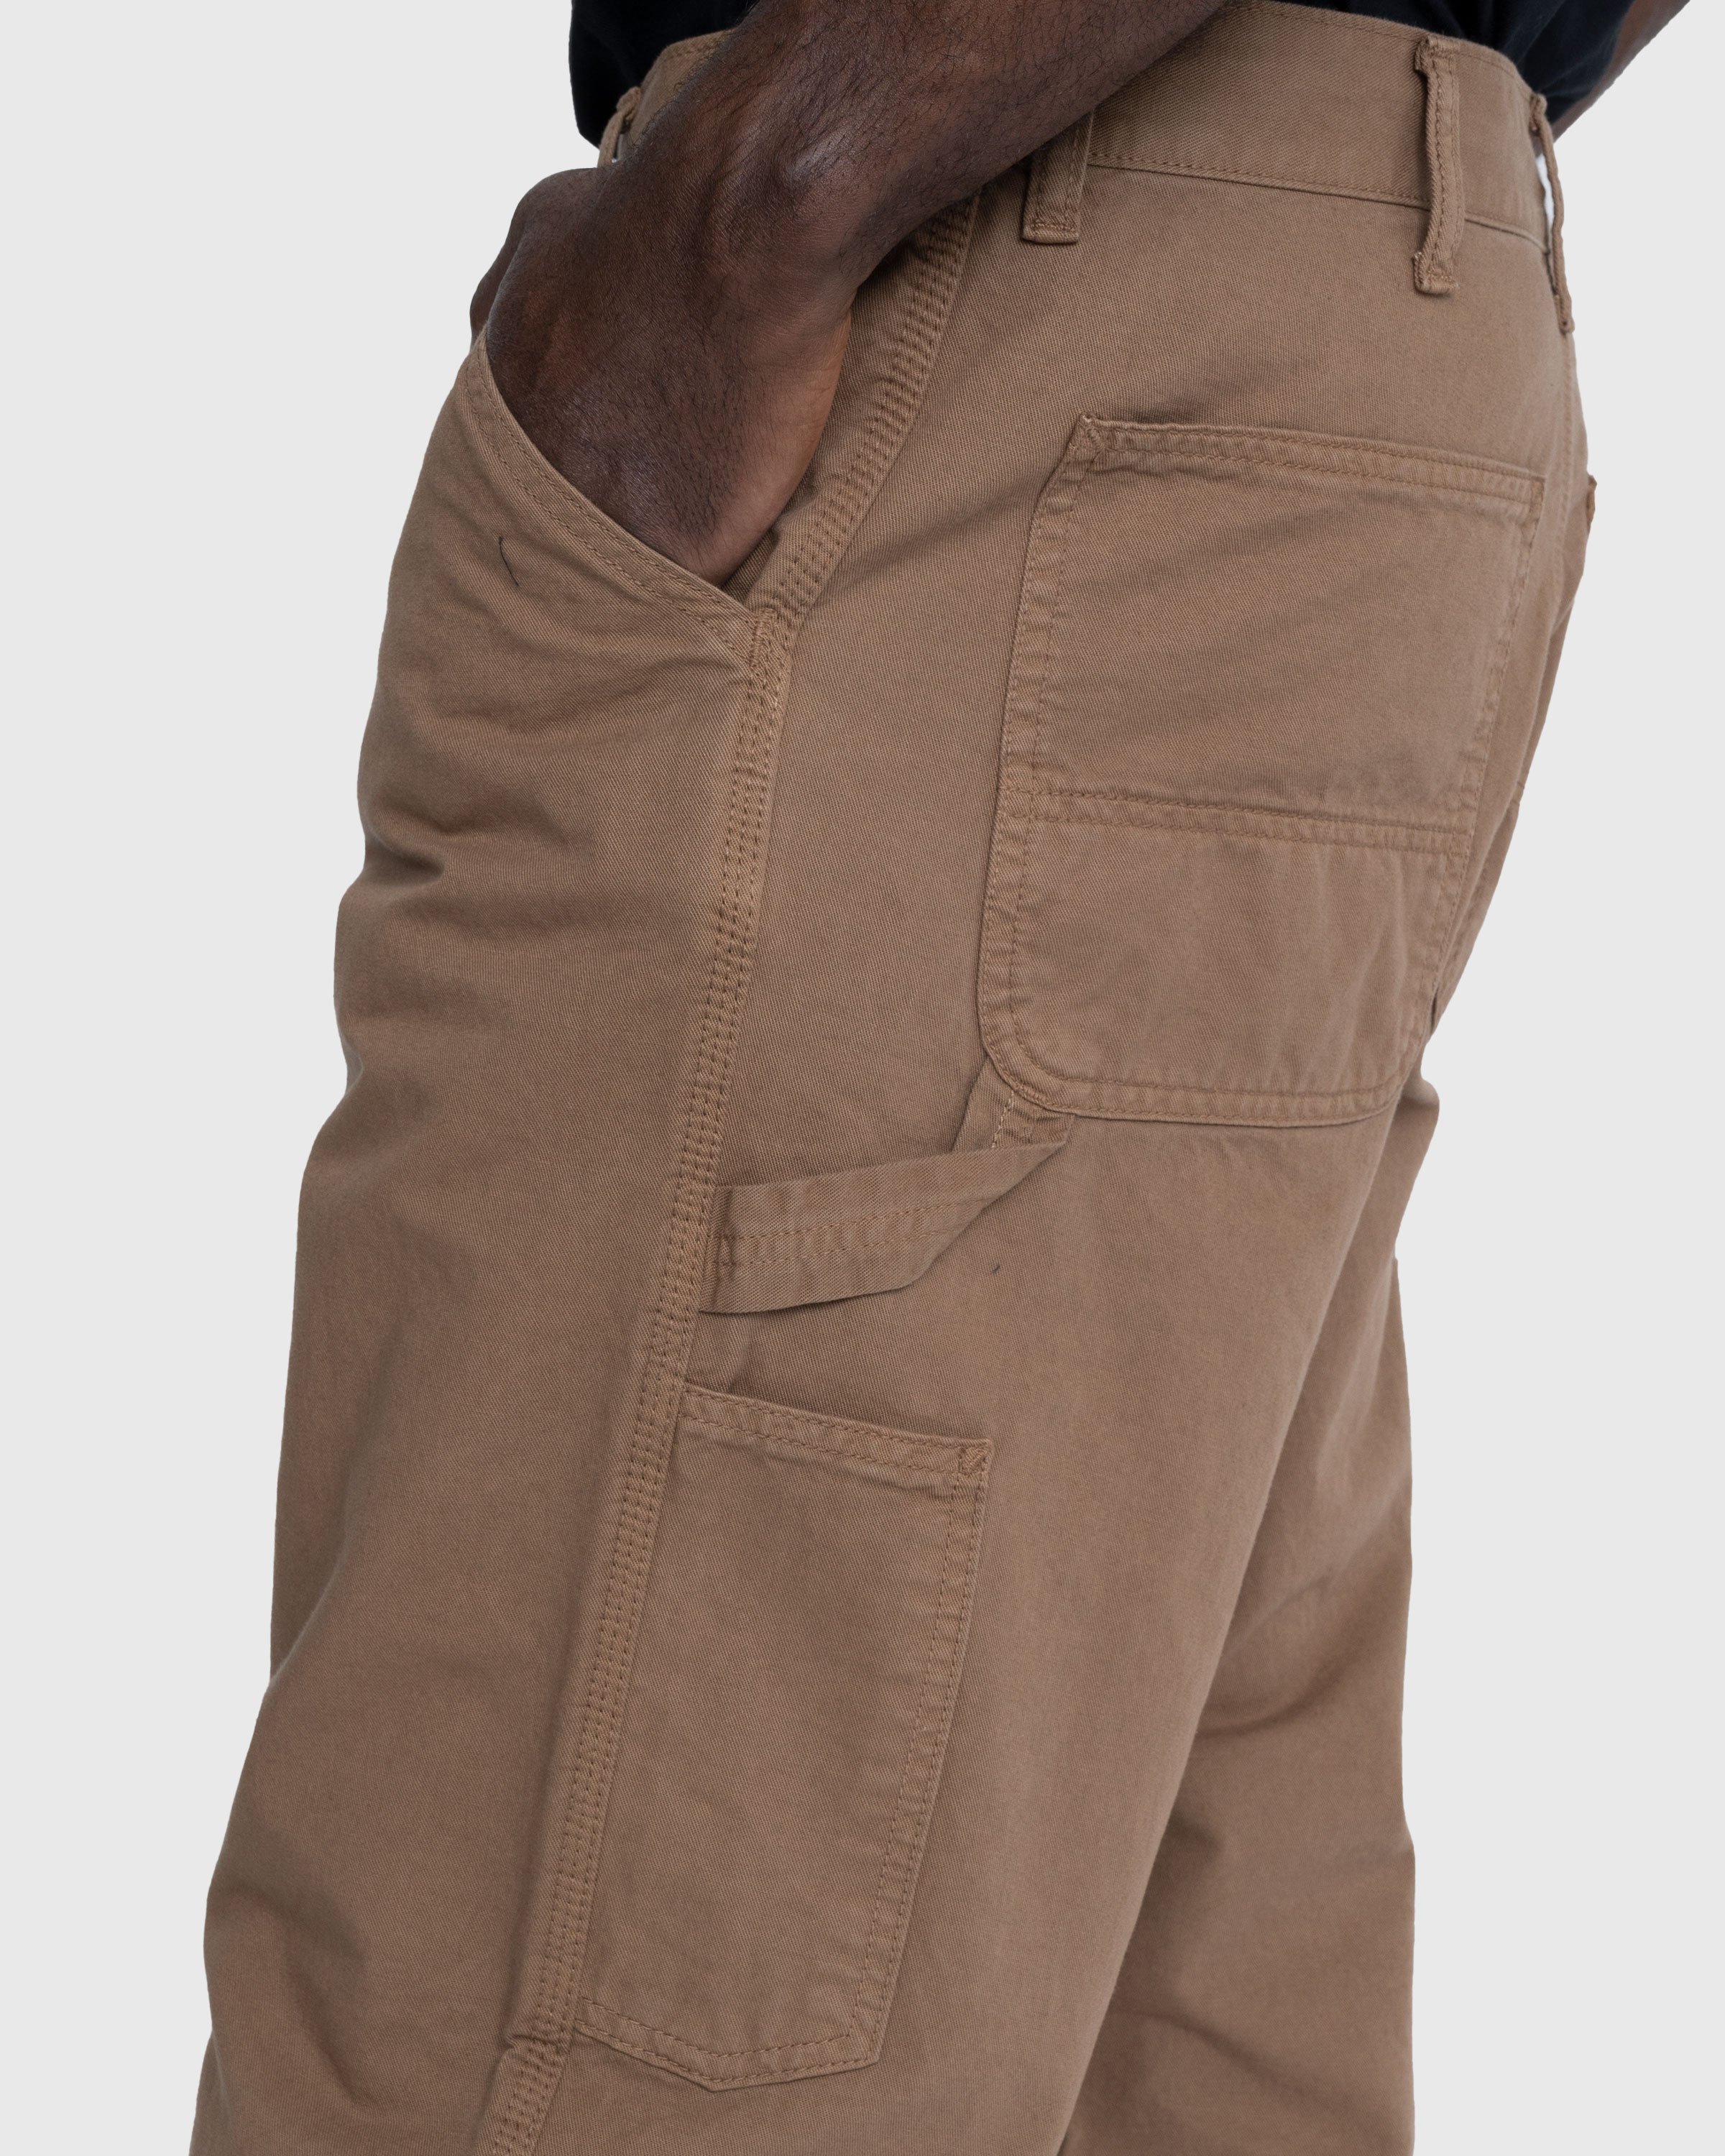 Carhartt WIP - Single Knee Pant Buffalo - Clothing - Brown - Image 6